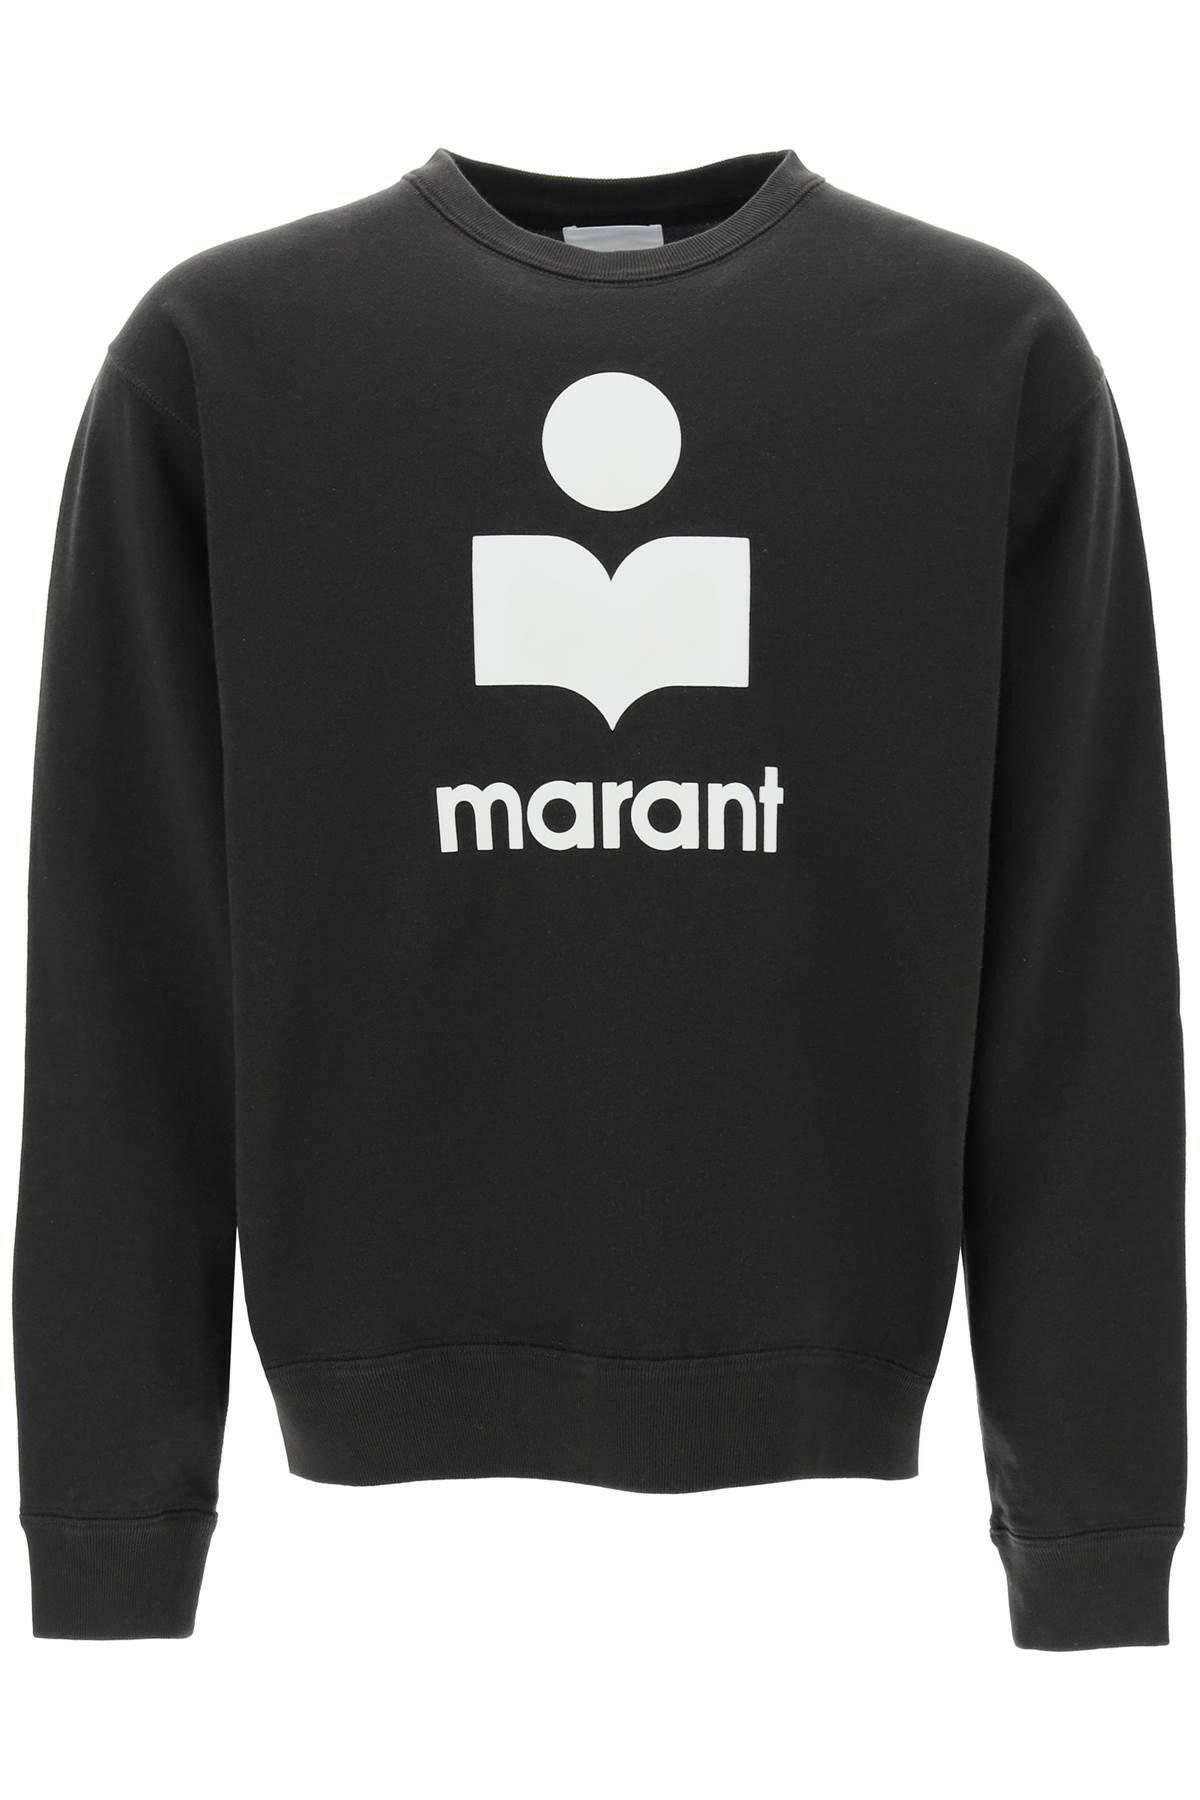 Marant Mikoy Flocked Logo Sweatshirt - JOHN JULIA